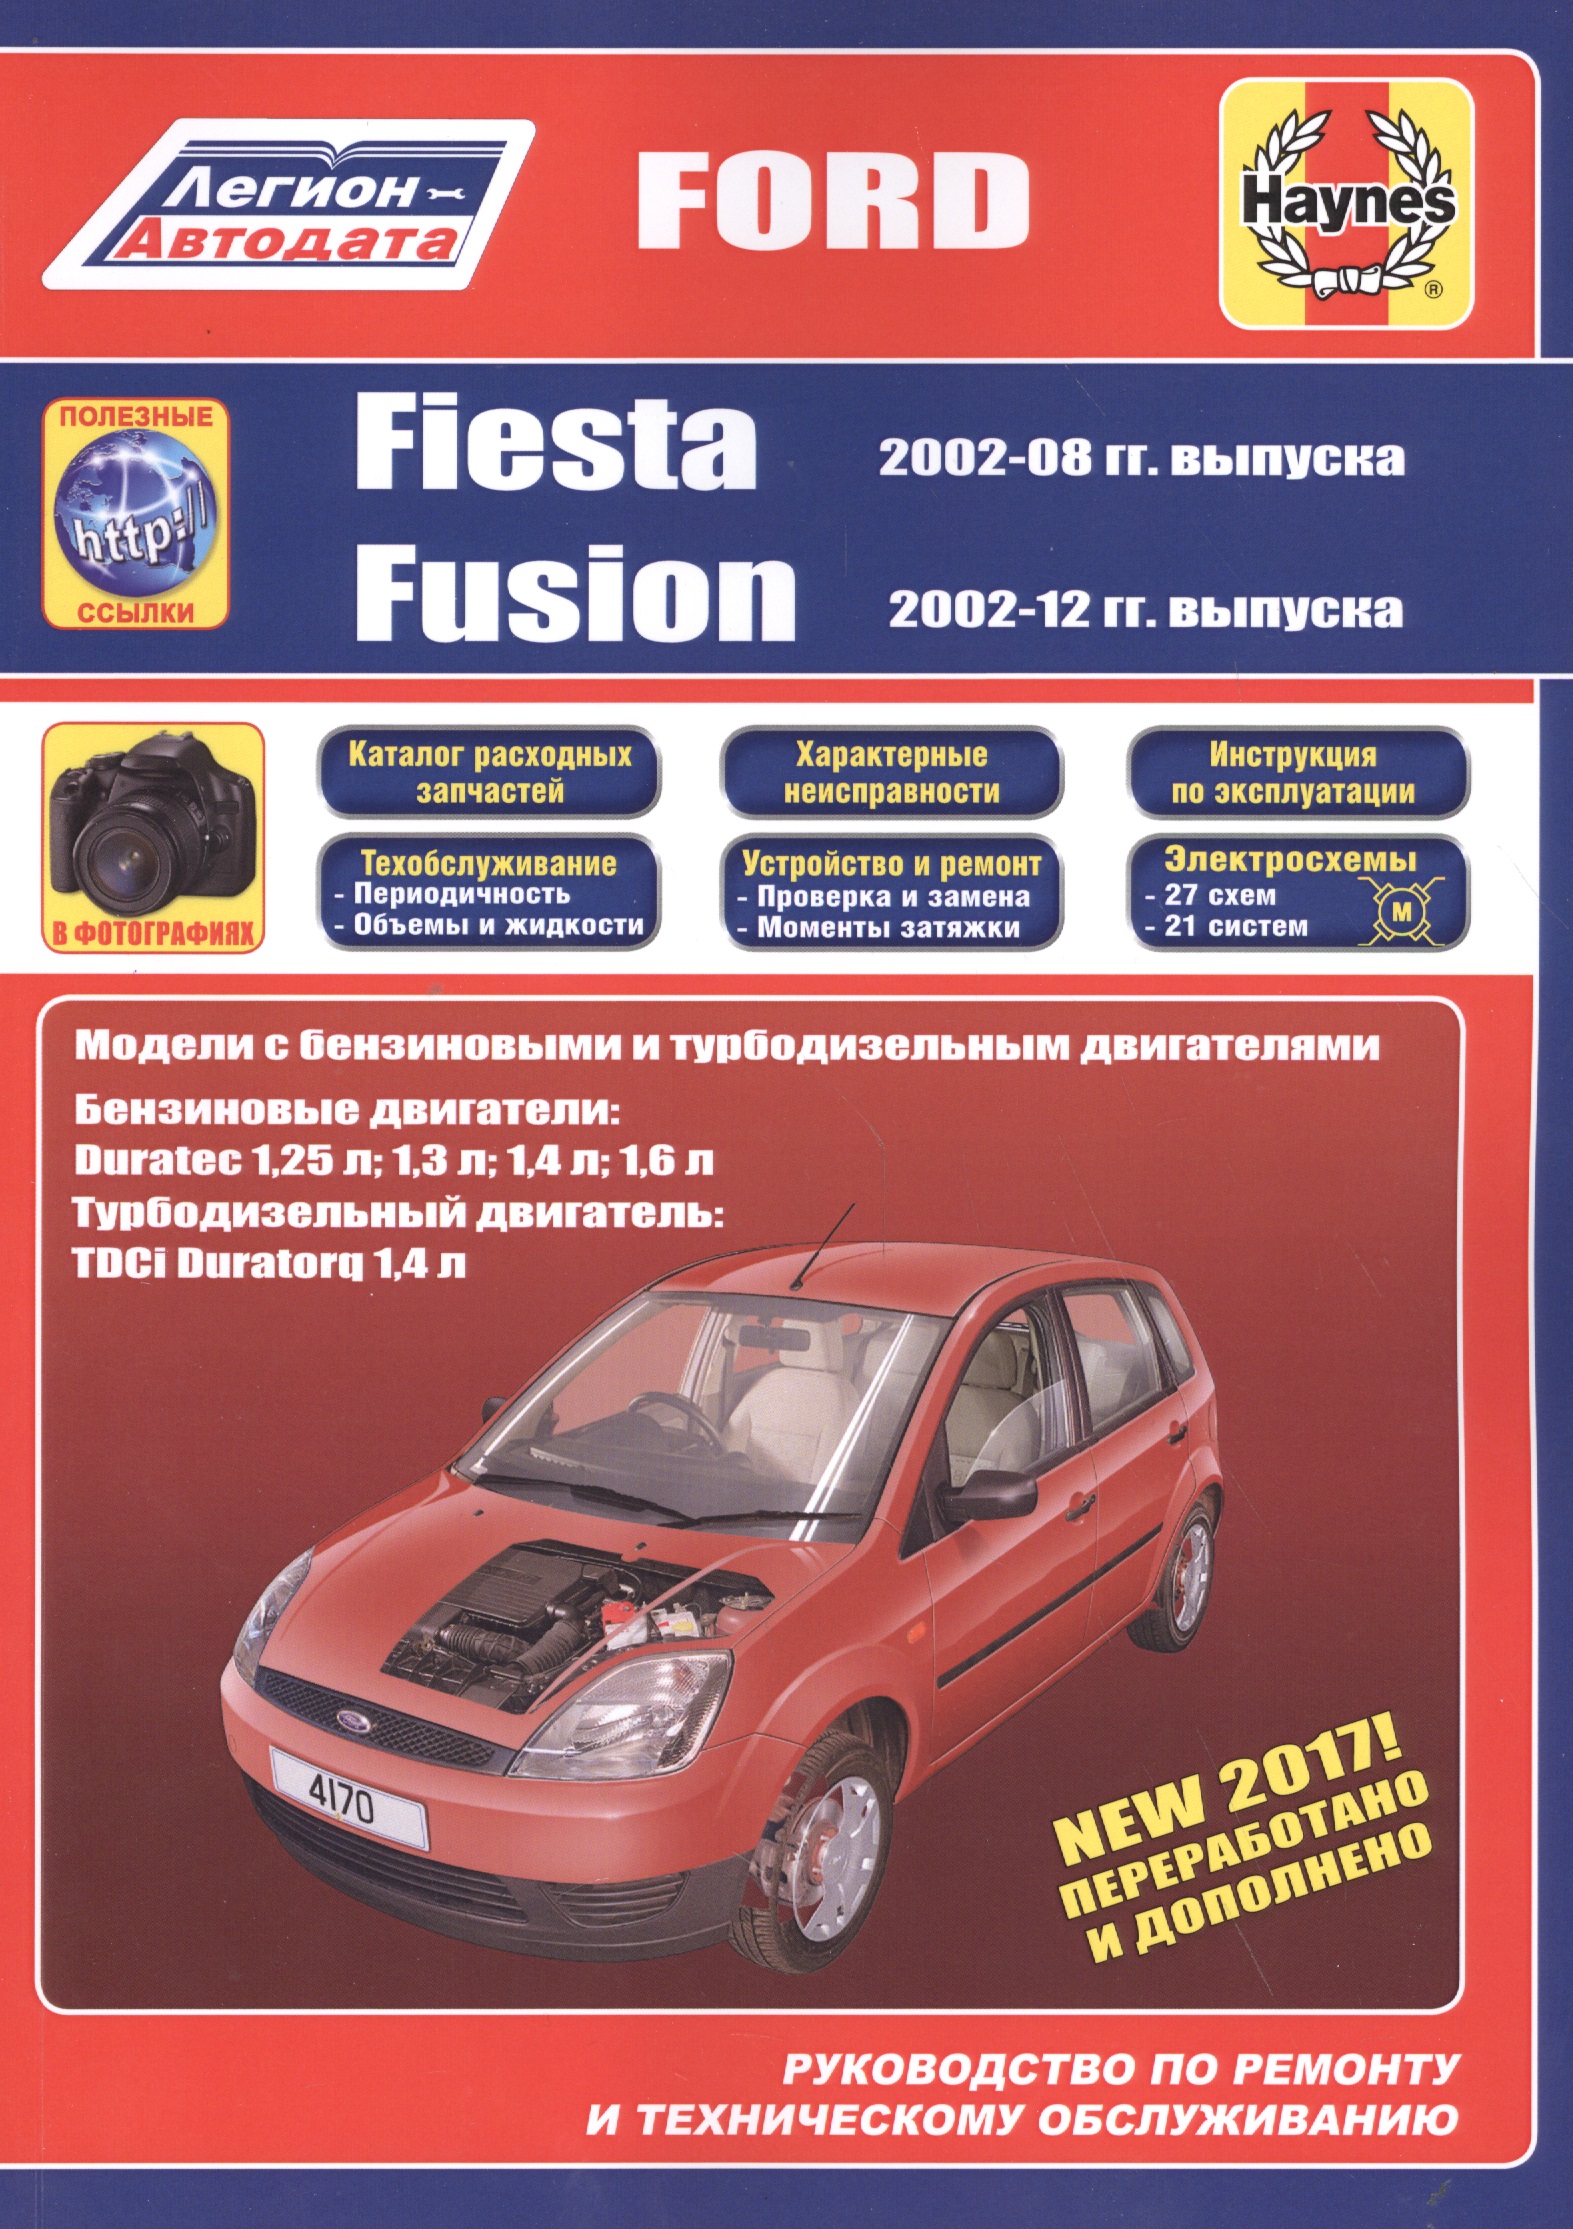 Ford Fiesta & Fusion 2002-08/12 бензин и дизель. Ремонт. Эксплуатация. ТО (ч/б фотографии+Каталог расходных з/ч, Характерные неисправности) фильтр салона ford fiesta fusion azumi арт ac51108c